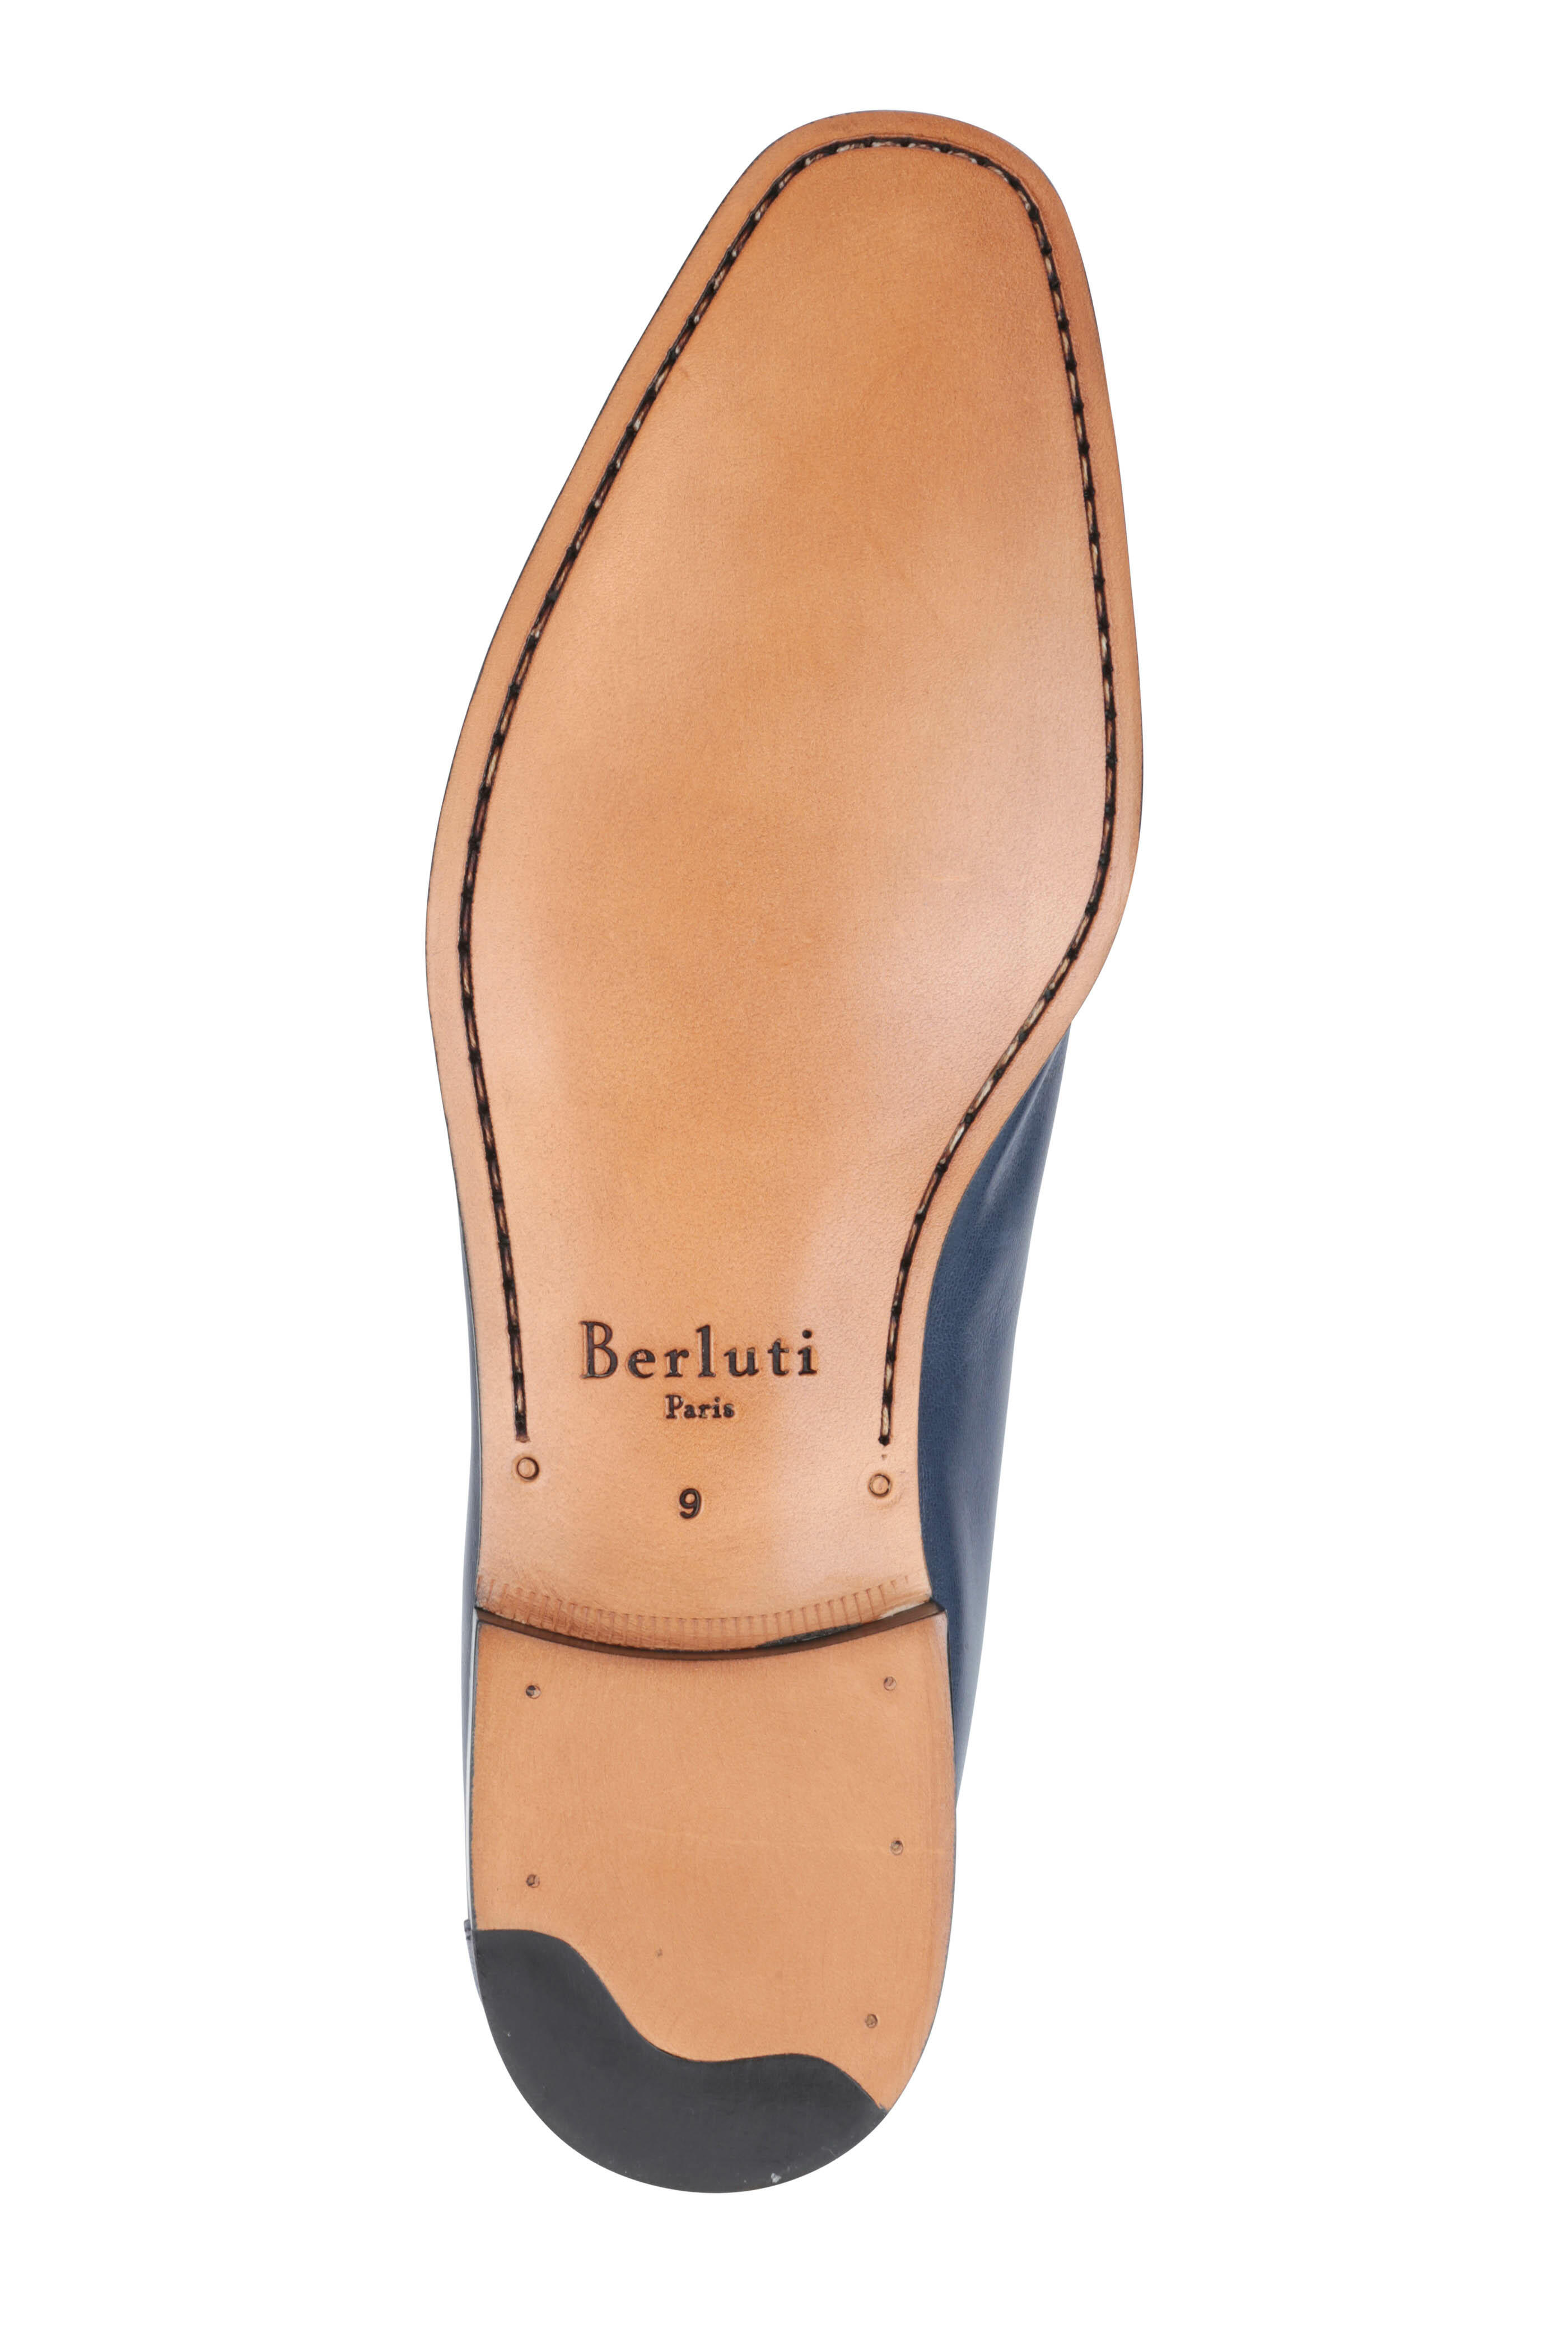 Berluti - Lorenzo Navy Sheepskin Leather Loafer | Mitchell Stores